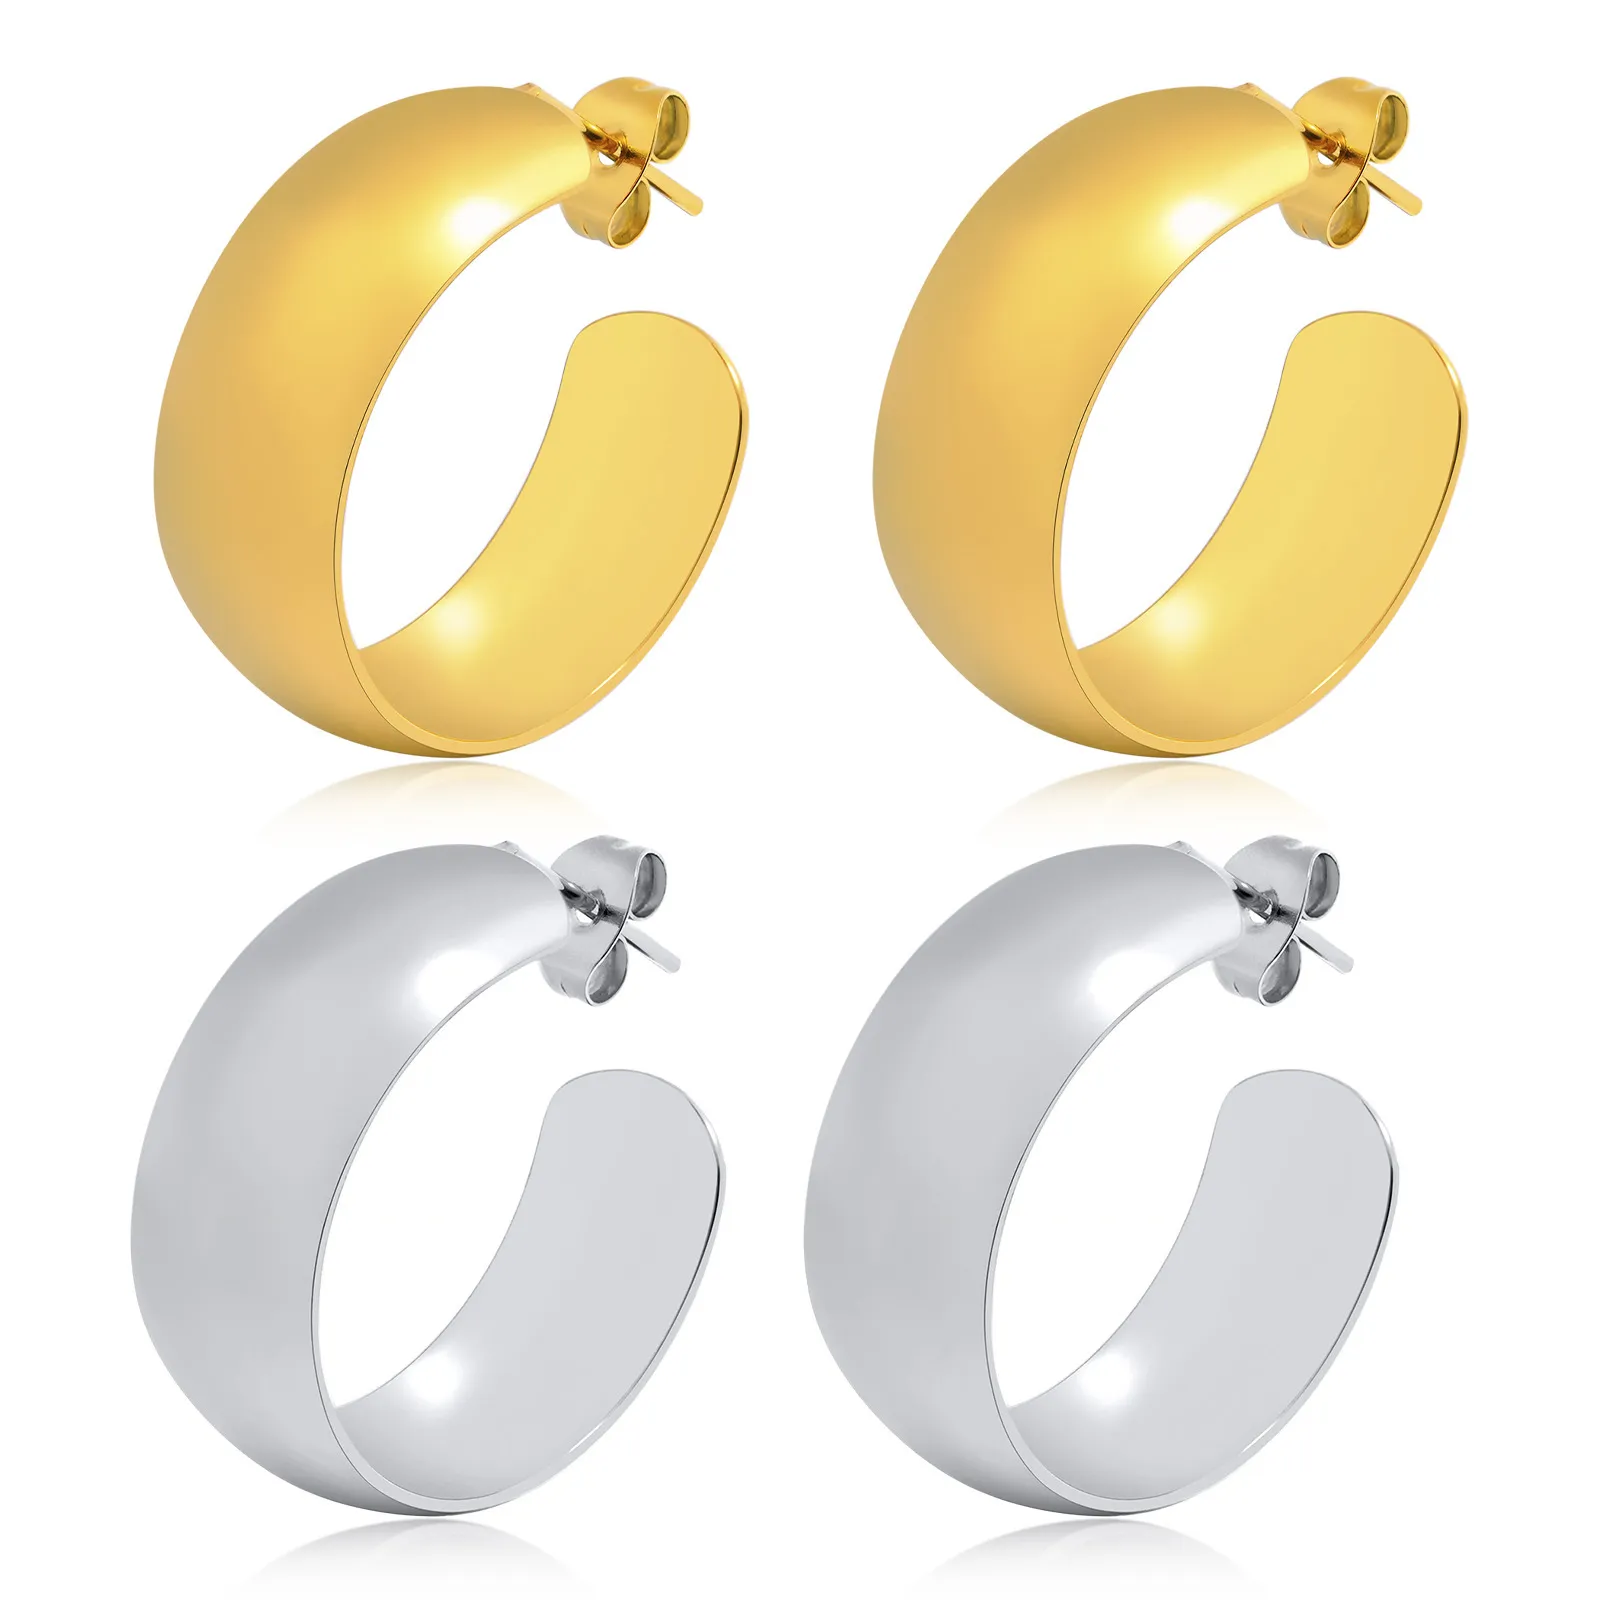 DE-542 Stainless Steel C Shape Earrings Steel Silver huggie Hoop Earring Gold For Ladies Women Gifts